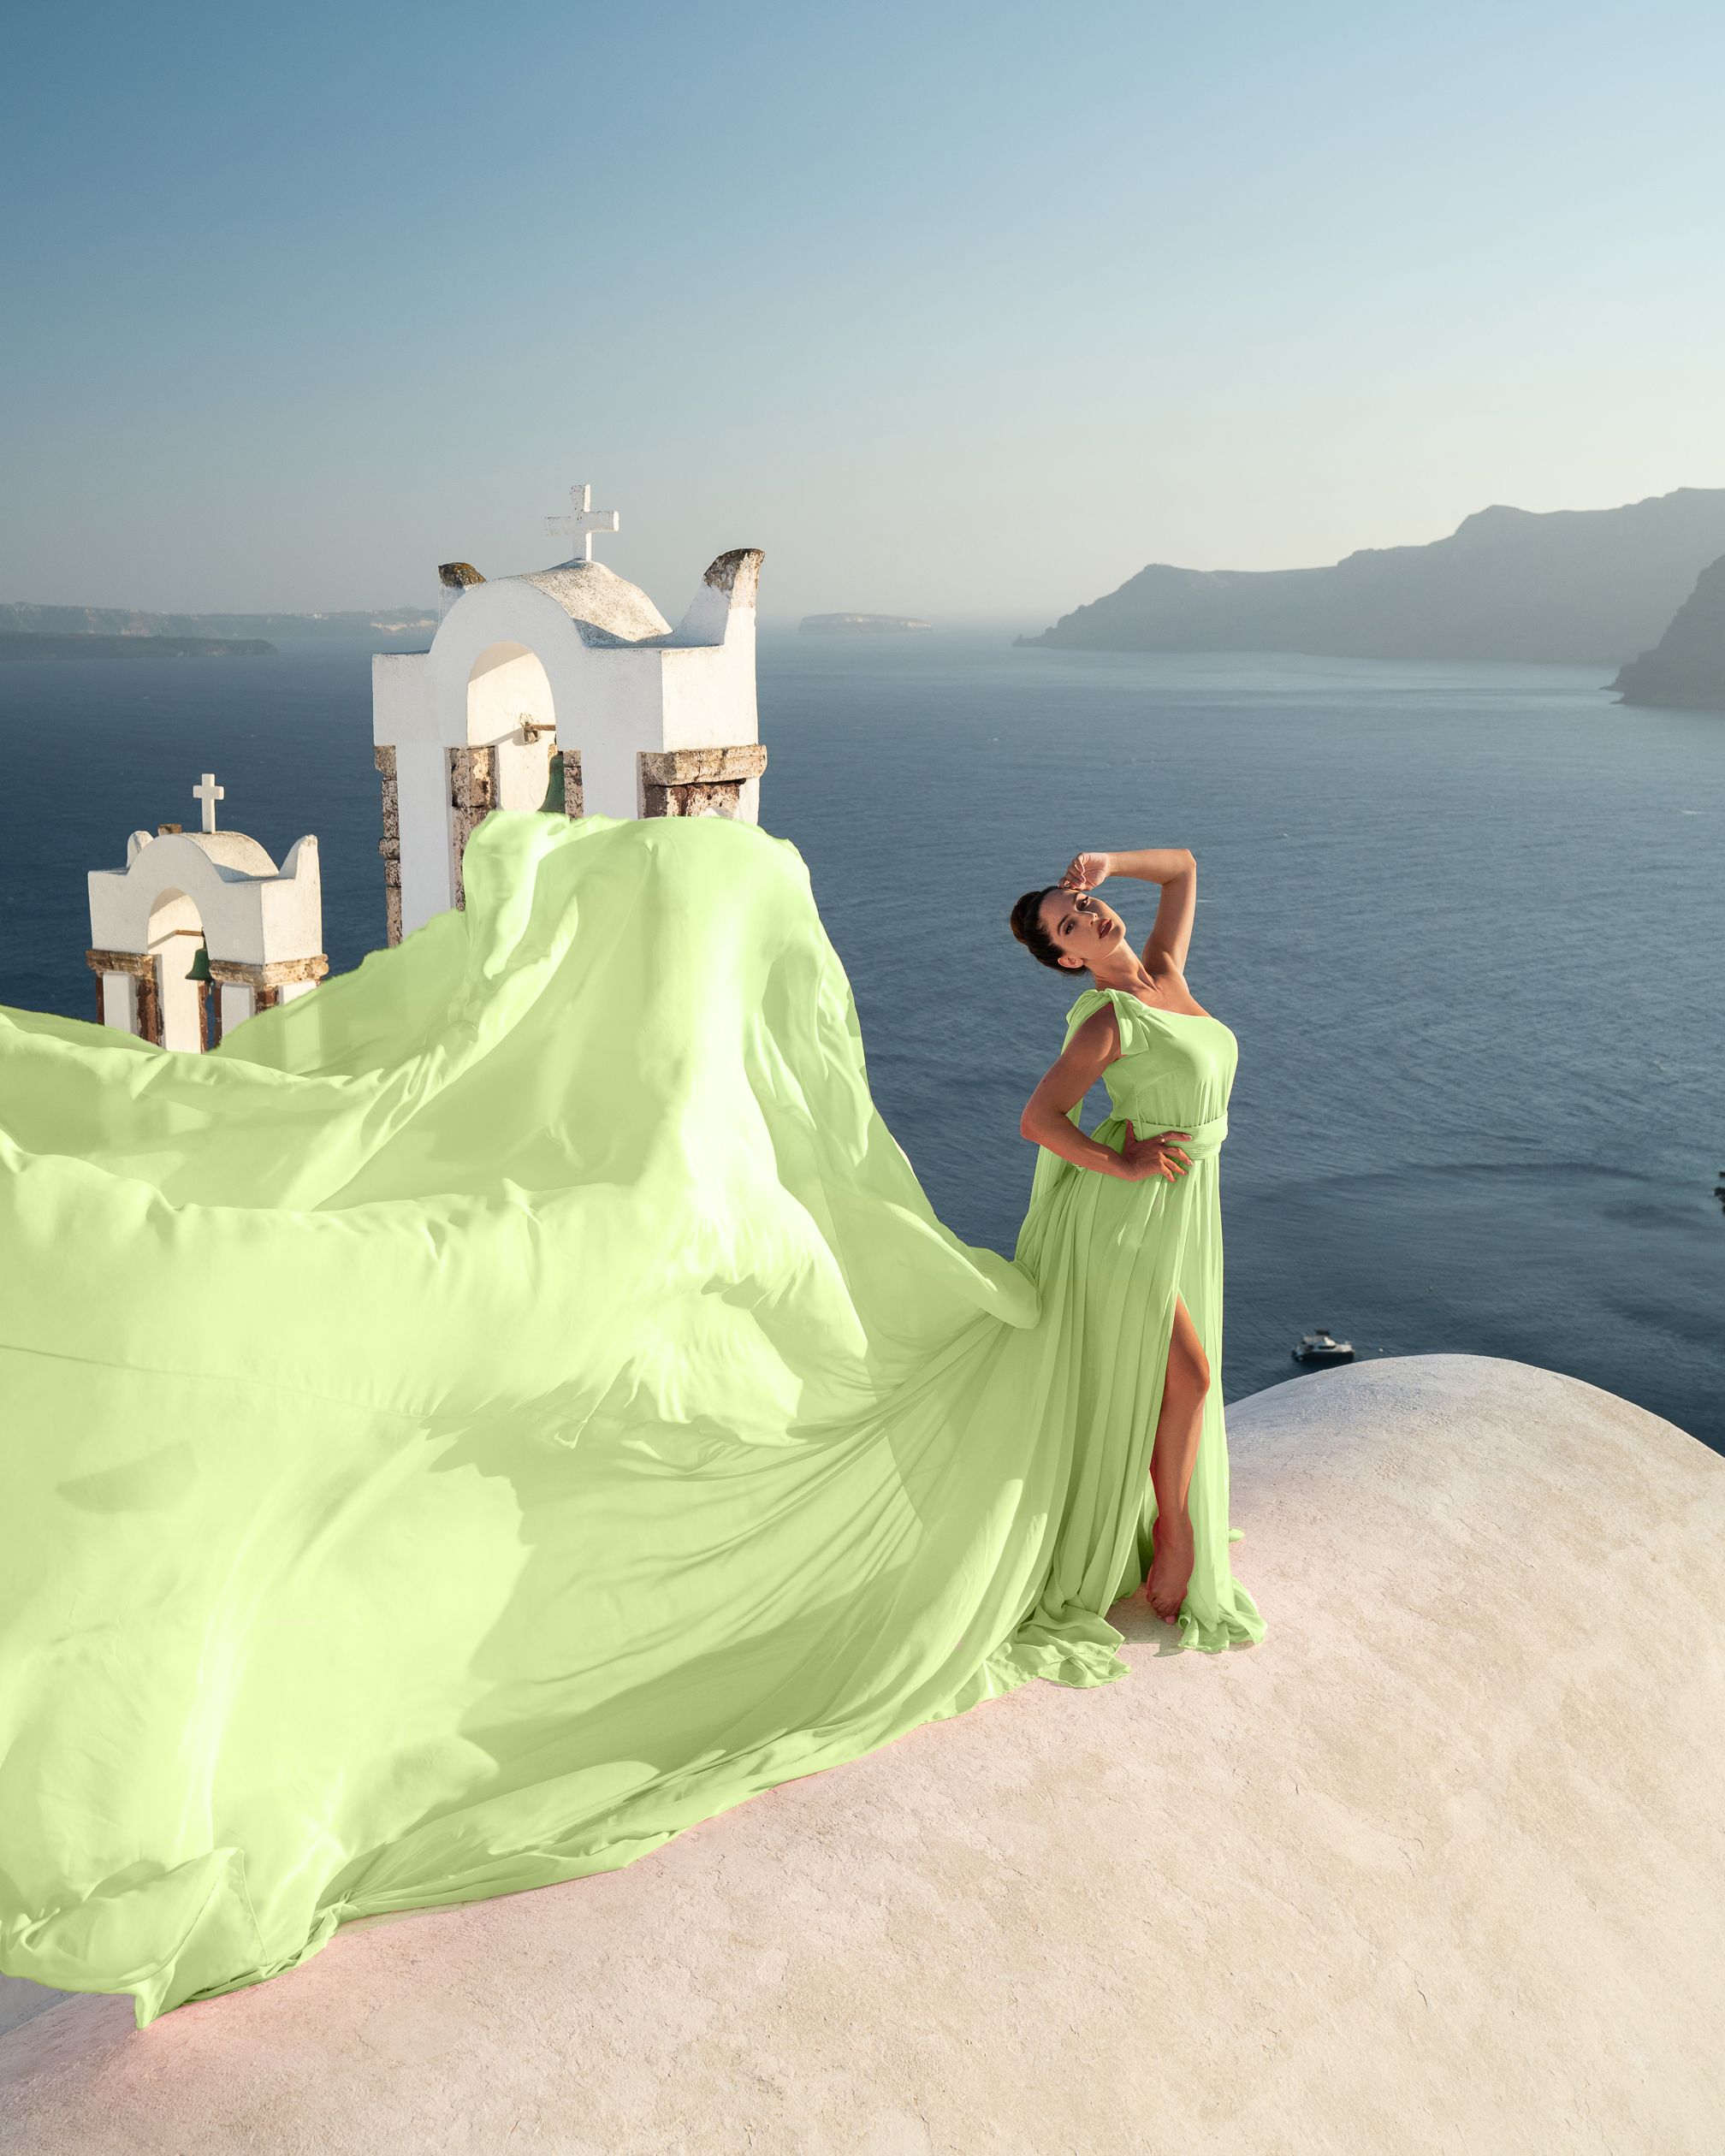 Santorini flying dress photoshoot in Oia village with Natalia Barulich